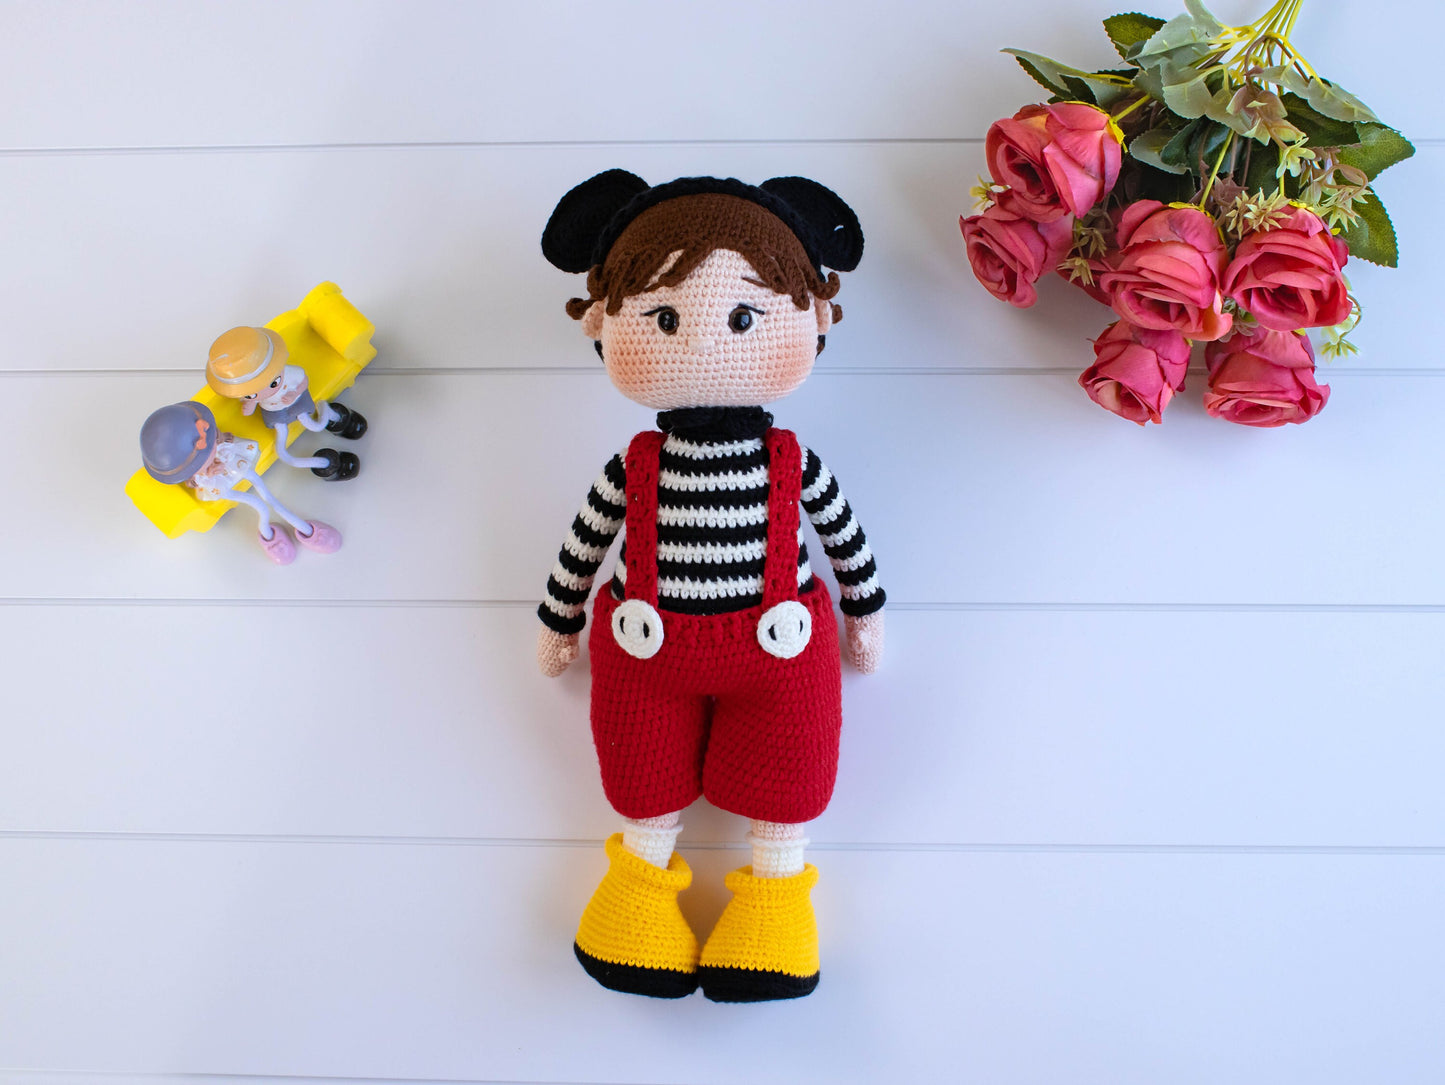 Amigurumi Doll Atlas with Mickey Hat, Knitted Dolls, Crochet Doll Amigurumi, Handmade Doll, Boy Doll, Daughter Gift, Christmas Amigurumi